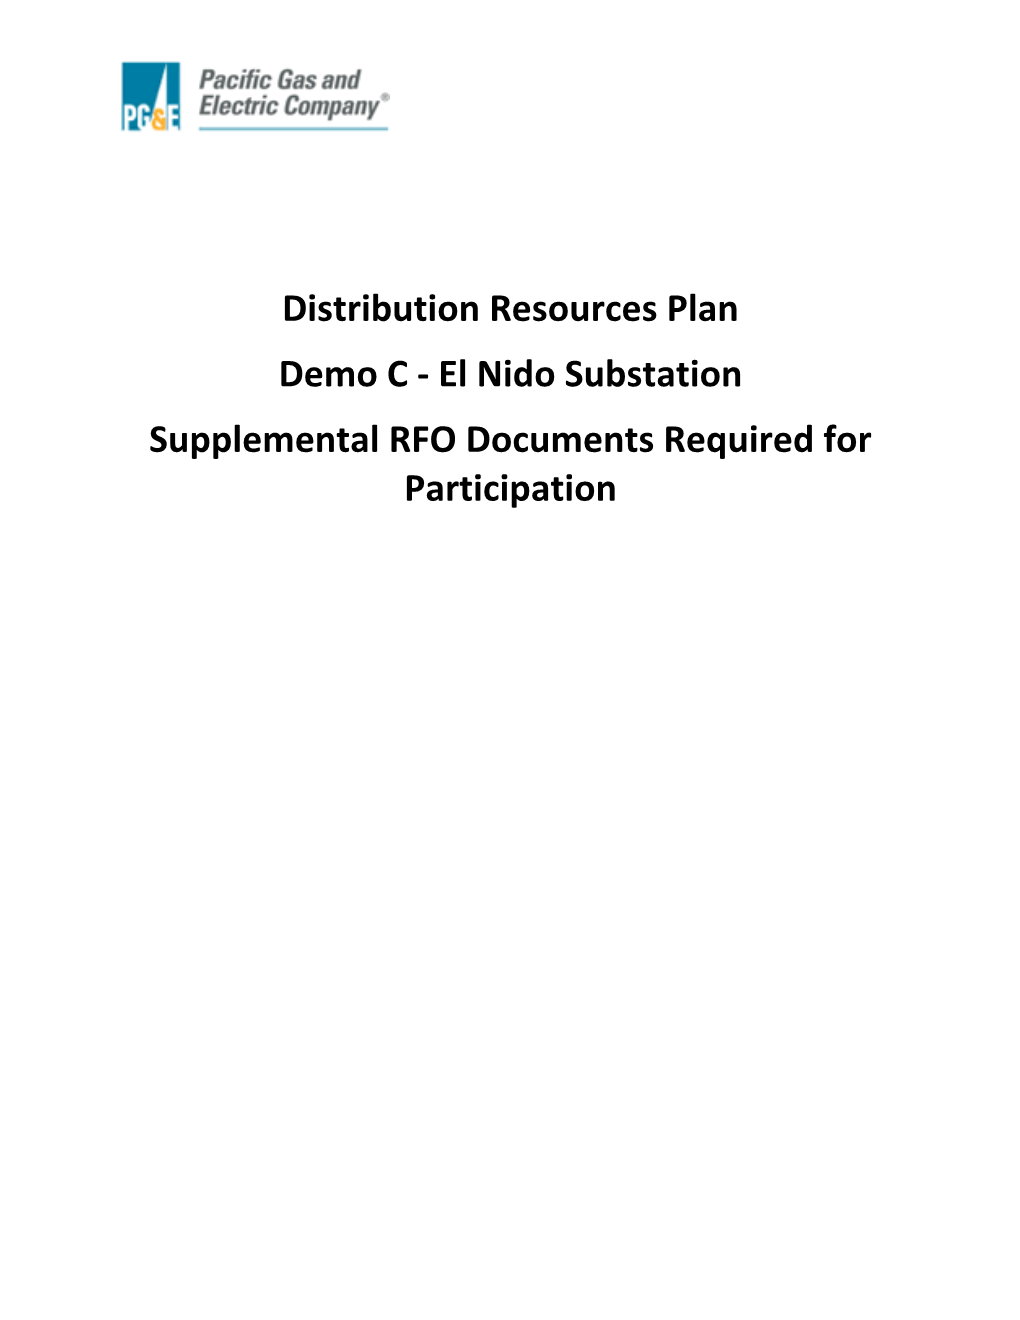 2017 Distribution Resources Plan Demo C El Nidosubstation RFO